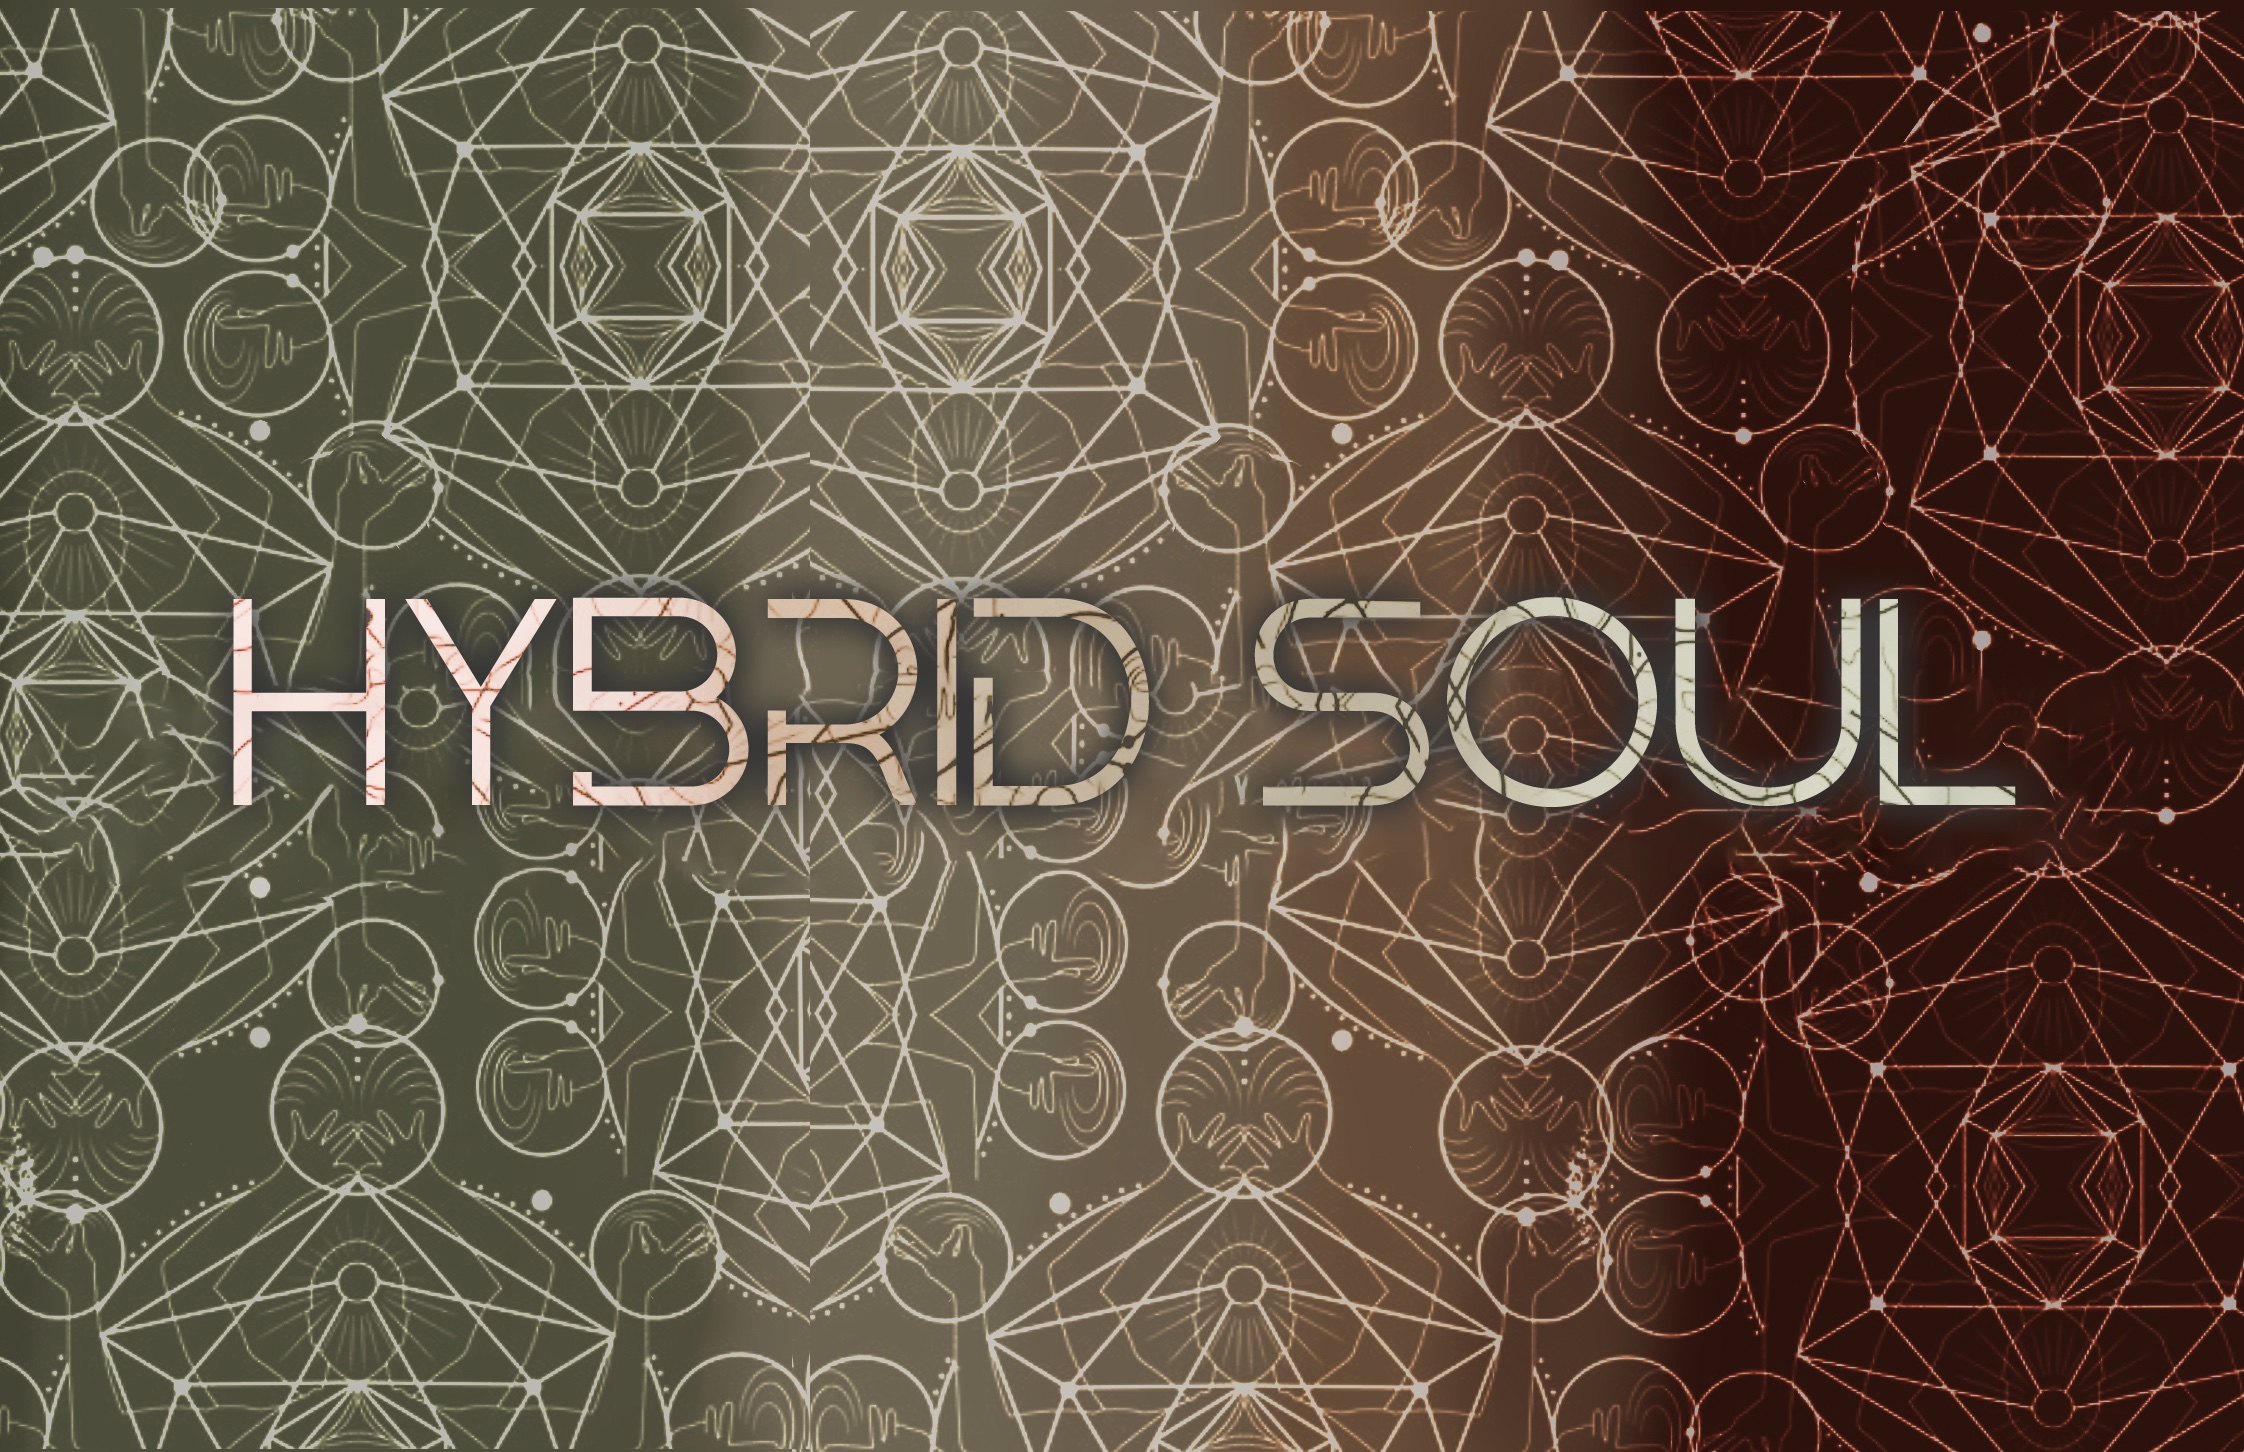 HYBRID SOUL